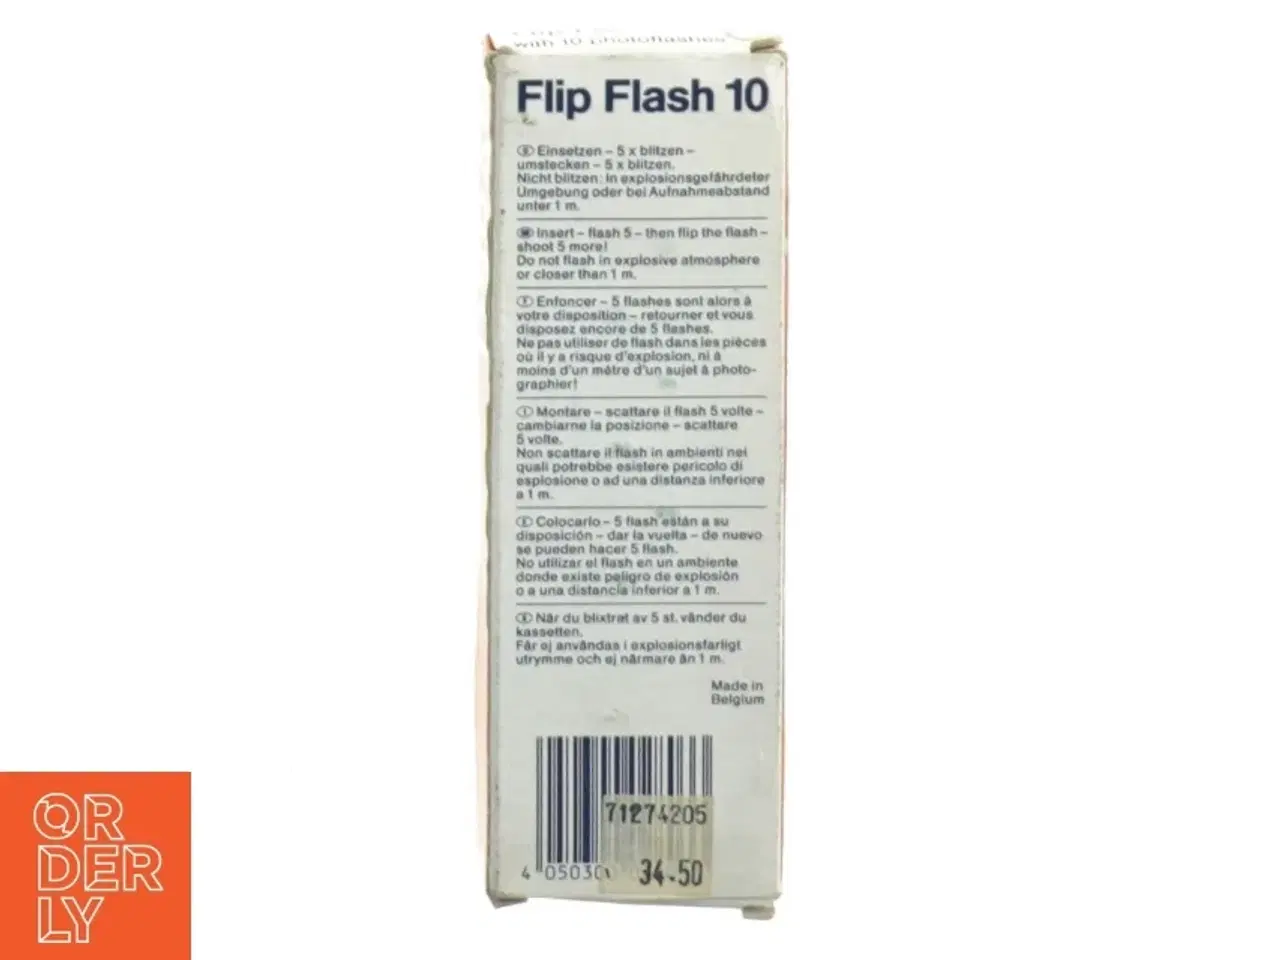 Billede 3 - Flash/blitz - Slip flash 10 stk fra Osram (str. 14 x 4 cm)